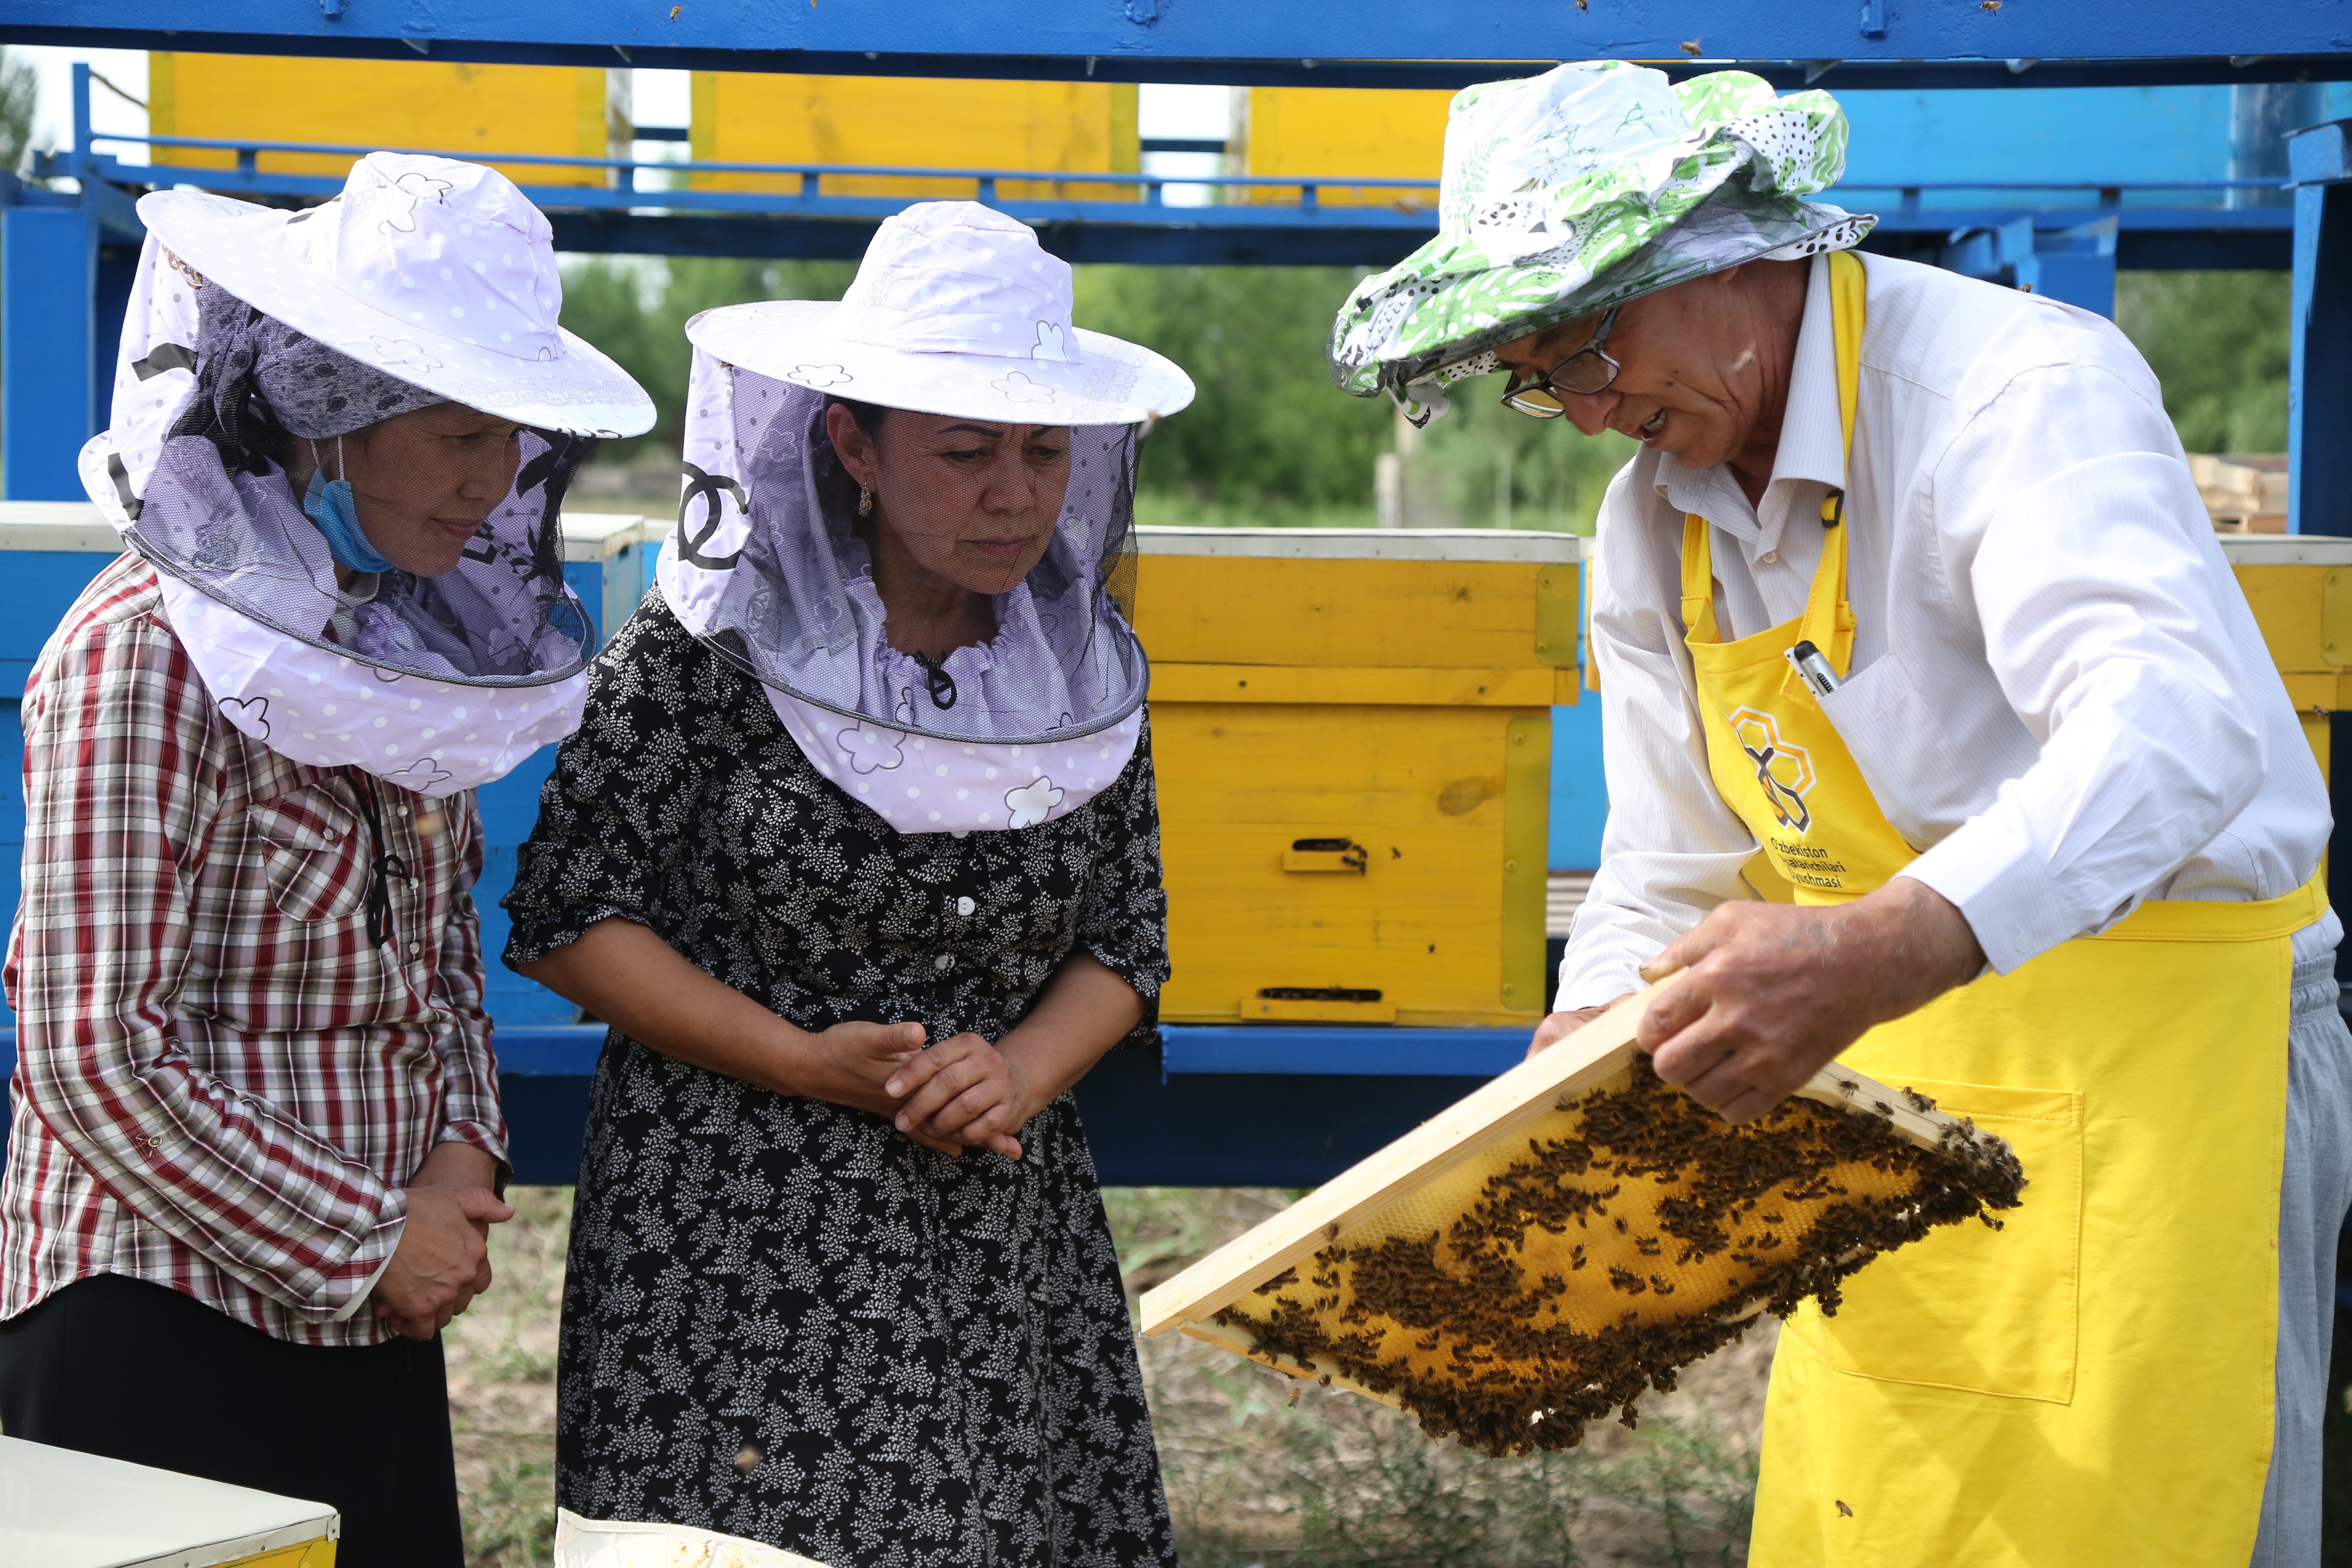 II. Benefits of Beekeeping for the Local Economy